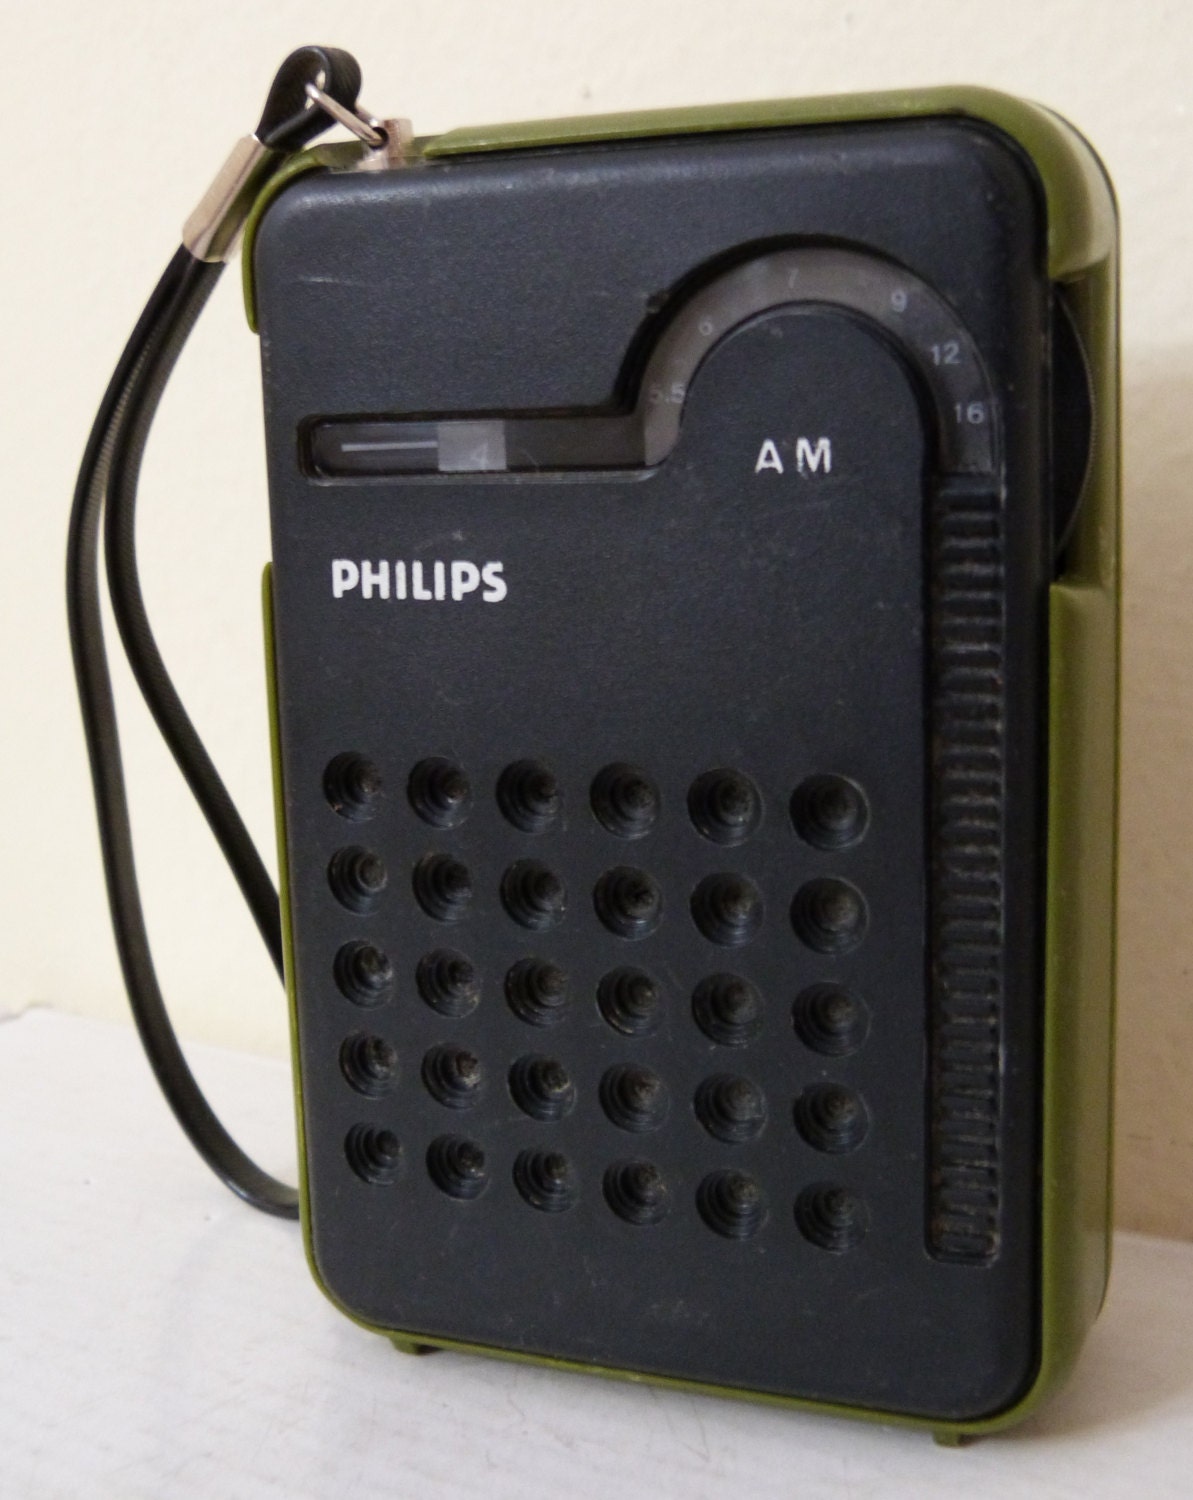 Early days of VHF/FM — Digital Spy